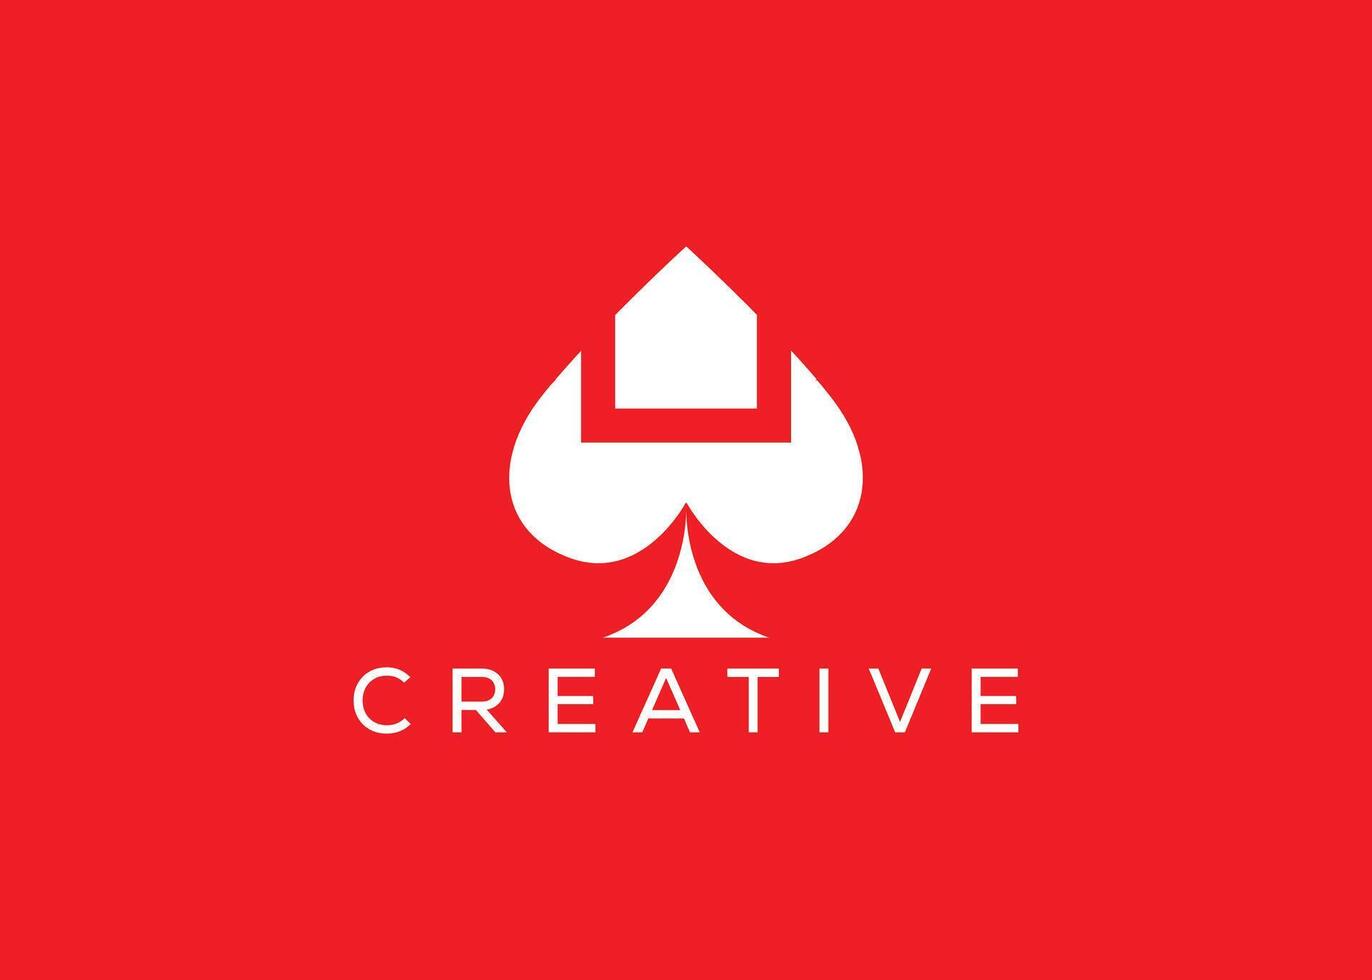 creatief en minimaal aas huis logo vector sjabloon. abstract aas huis logo